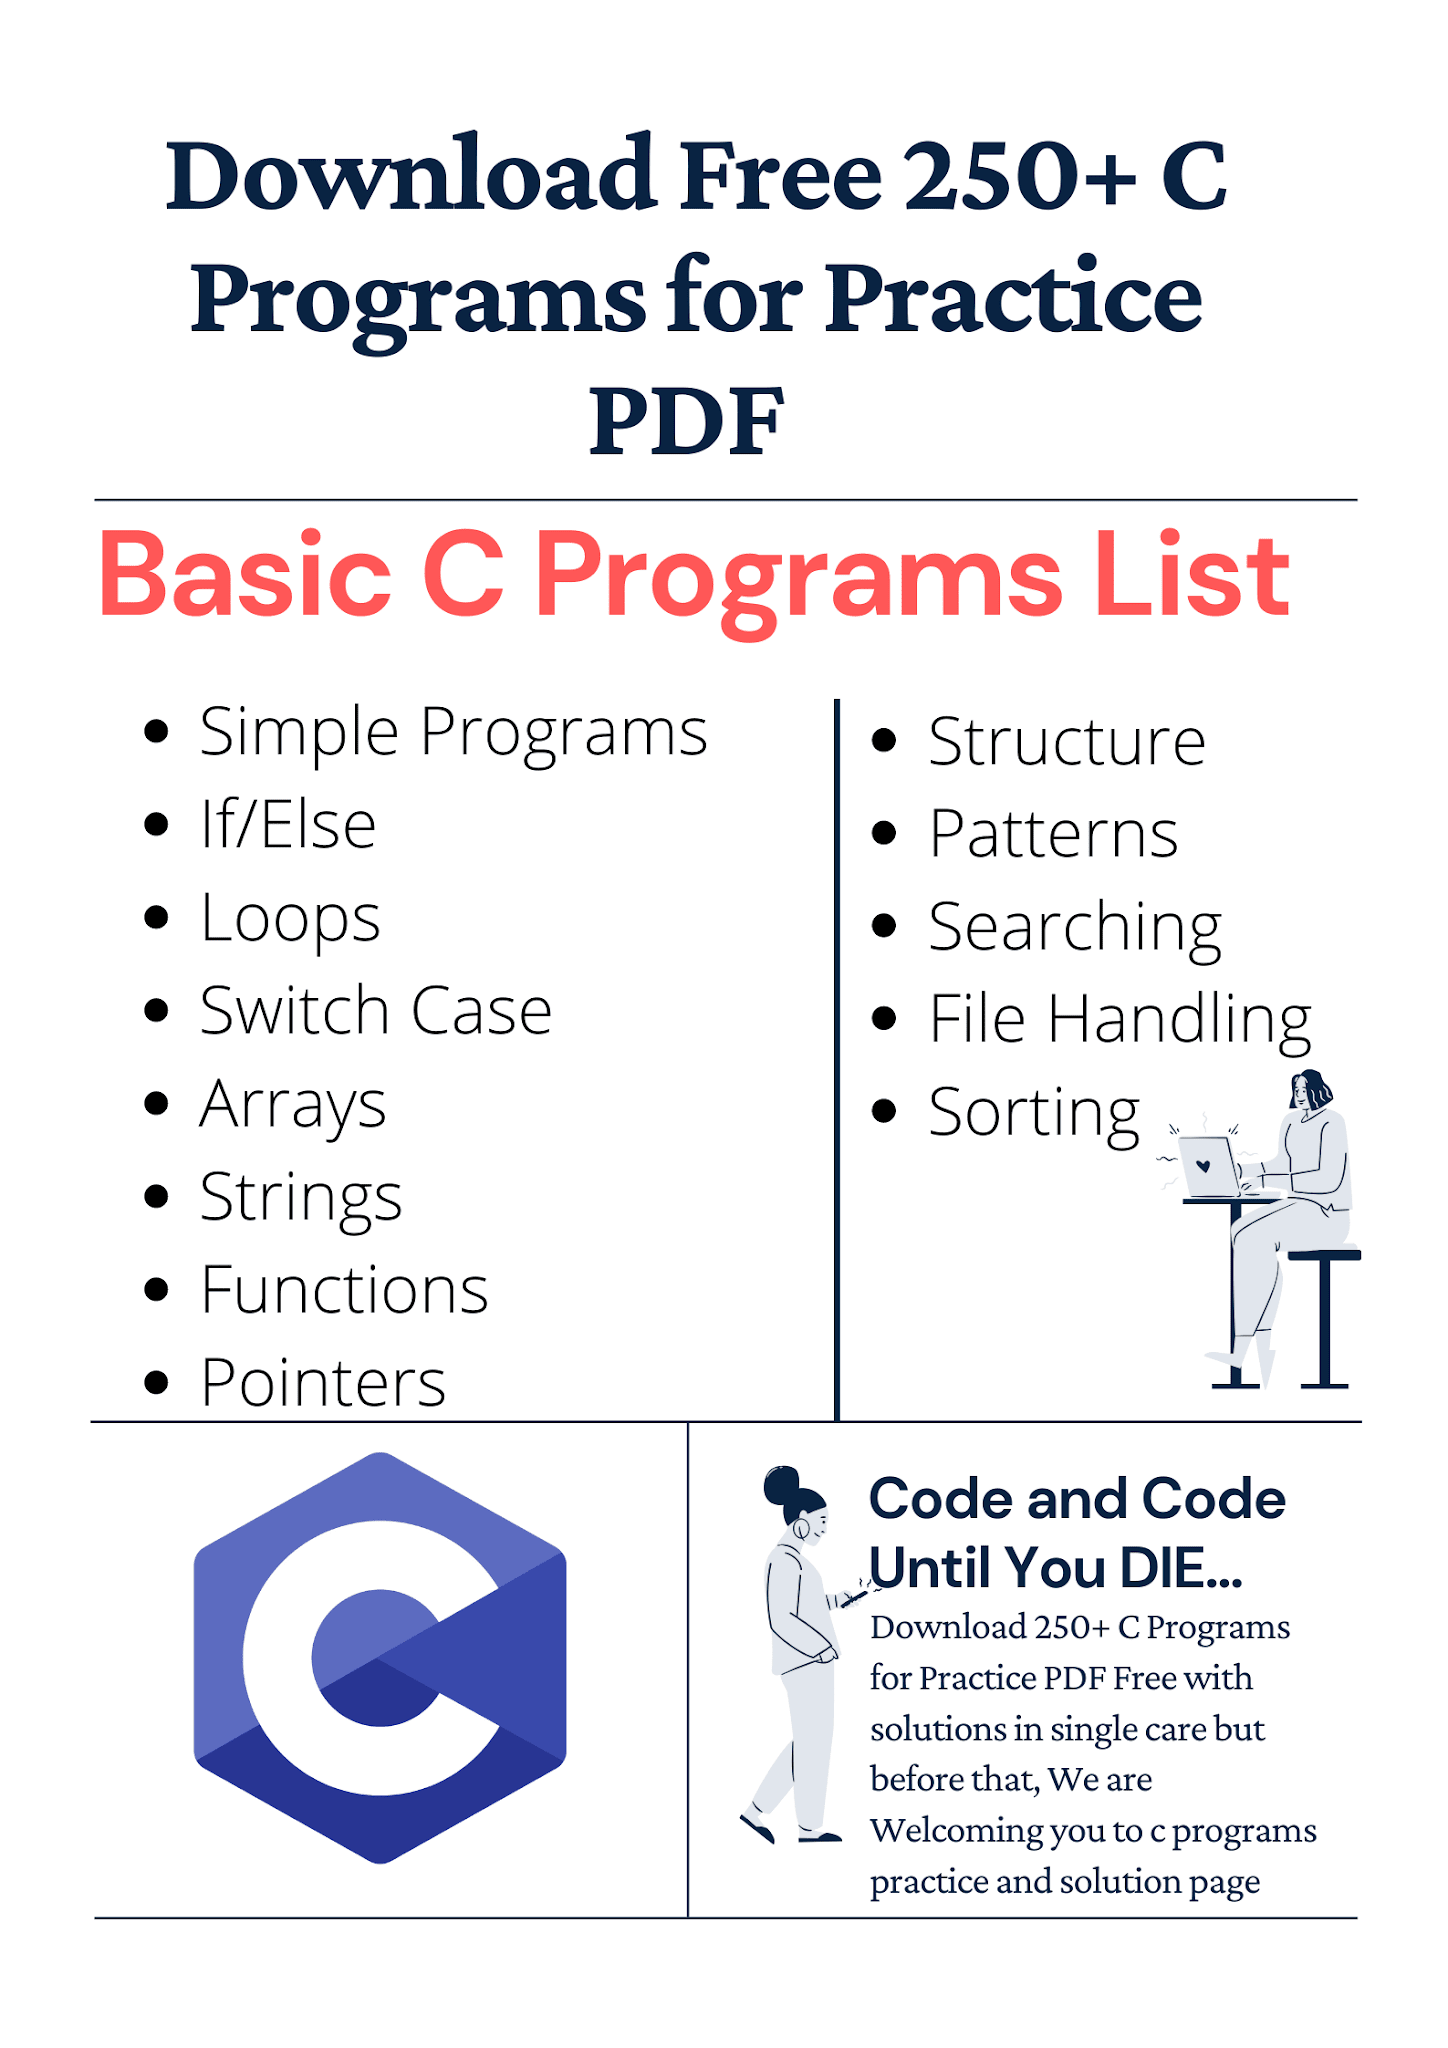 C Programs For Practice Pdf 99 Basic C Programs List Free